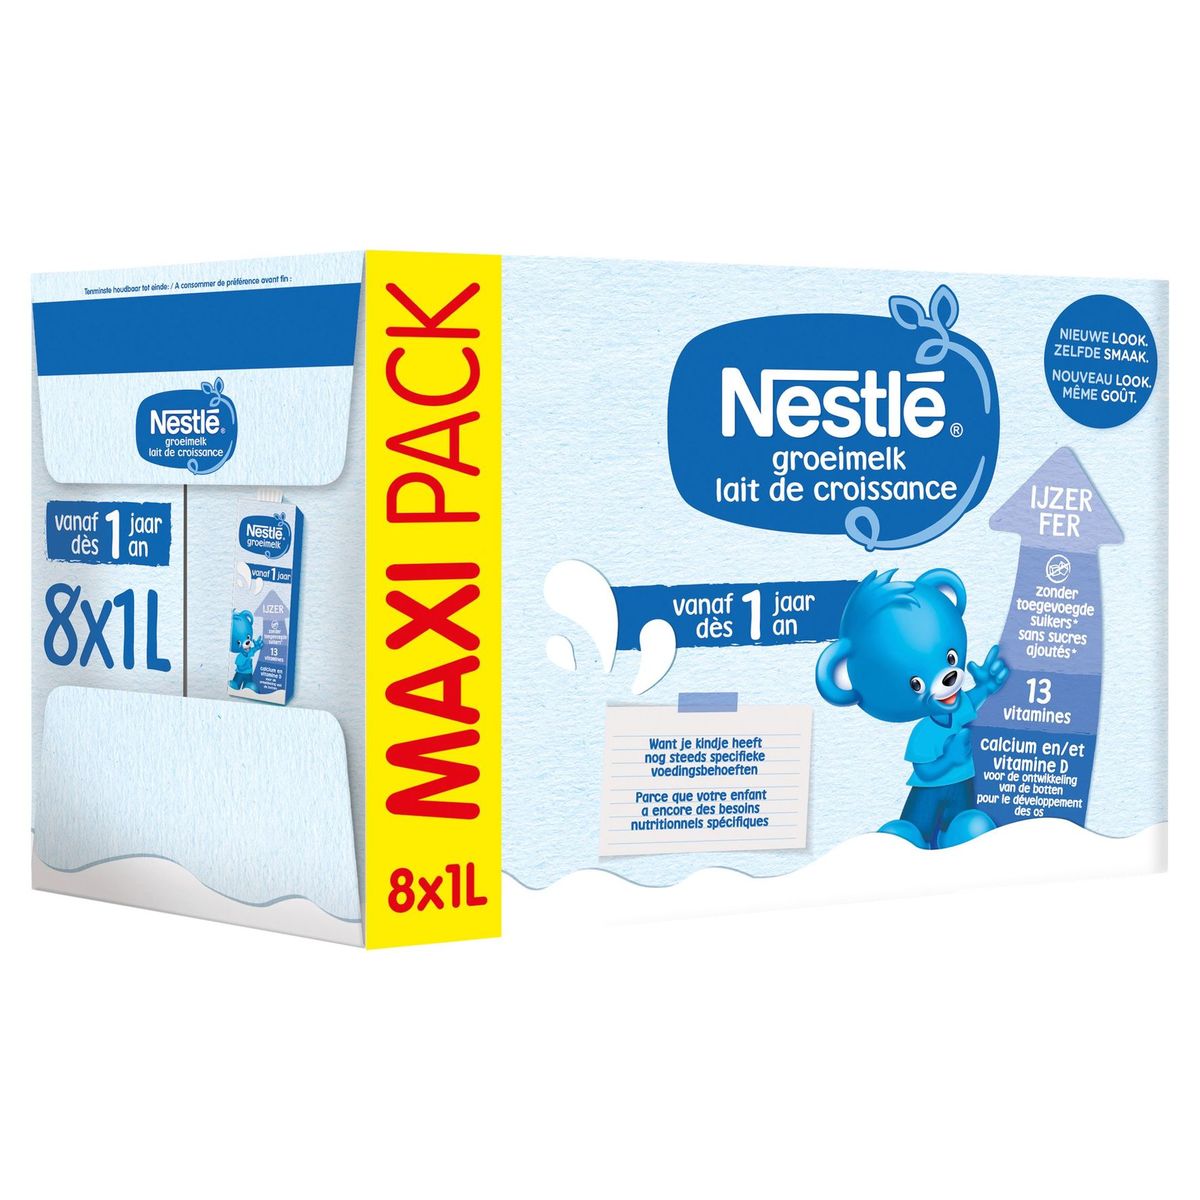 Nestlé Groeimelk 1+ vanaf 1 jaar Maxipack 8x1L